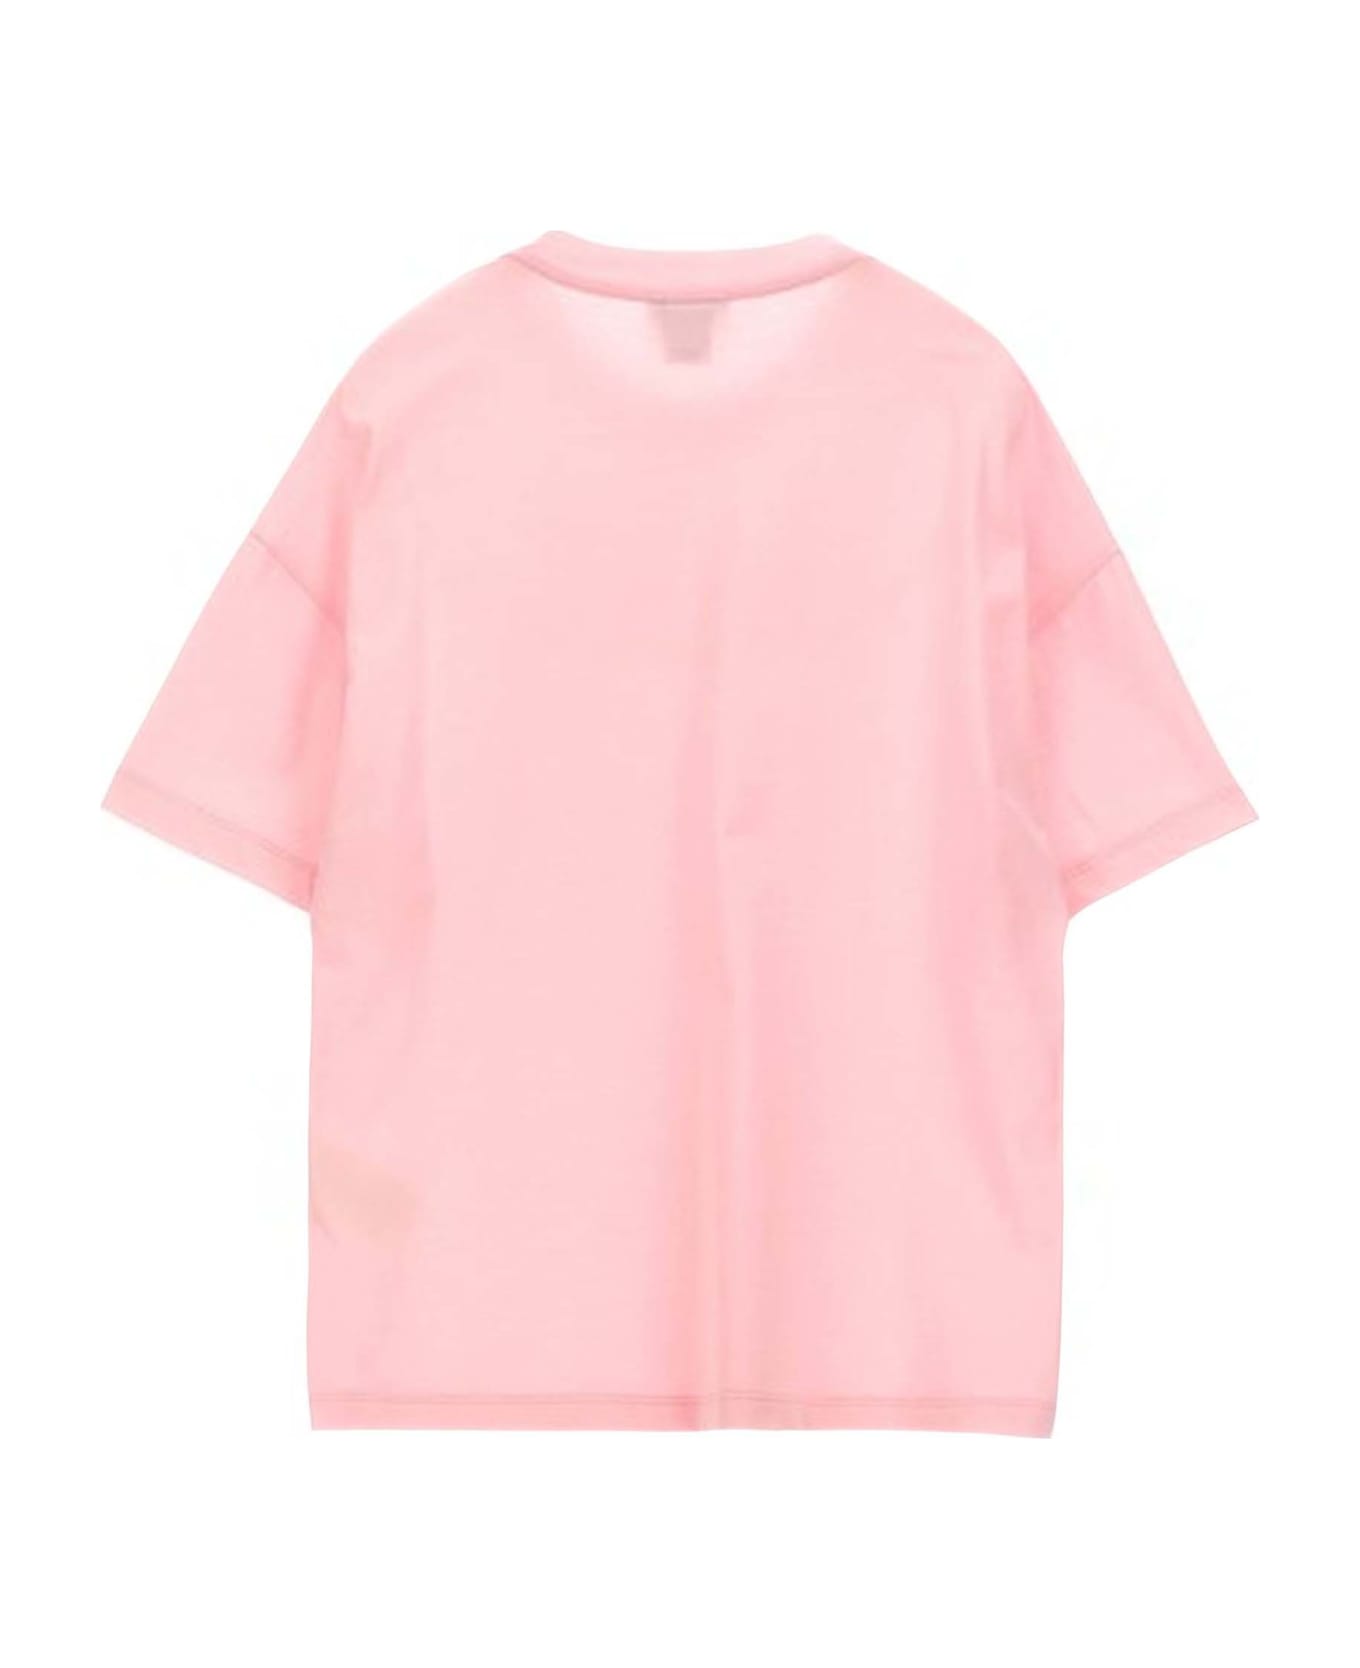 Fendi Kids T-shirts And Polos Pink - Pink